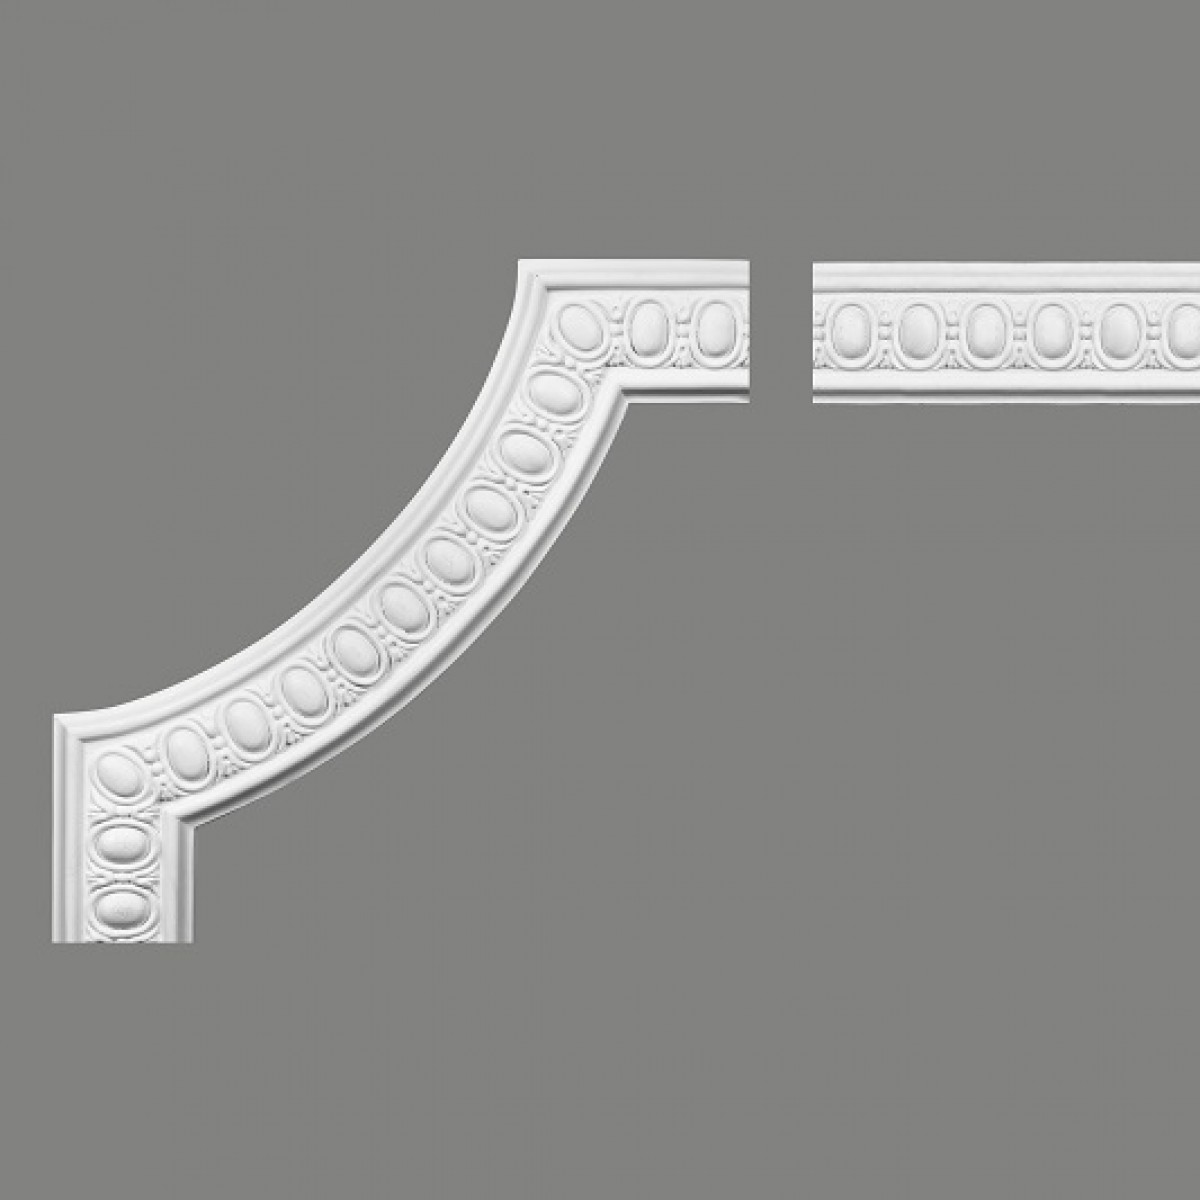 Coltar decorativ MDC250-12 pentru braul MDC250, 41 X 41 X 1.5 cm, Mardom Decor, Brauri decorative 